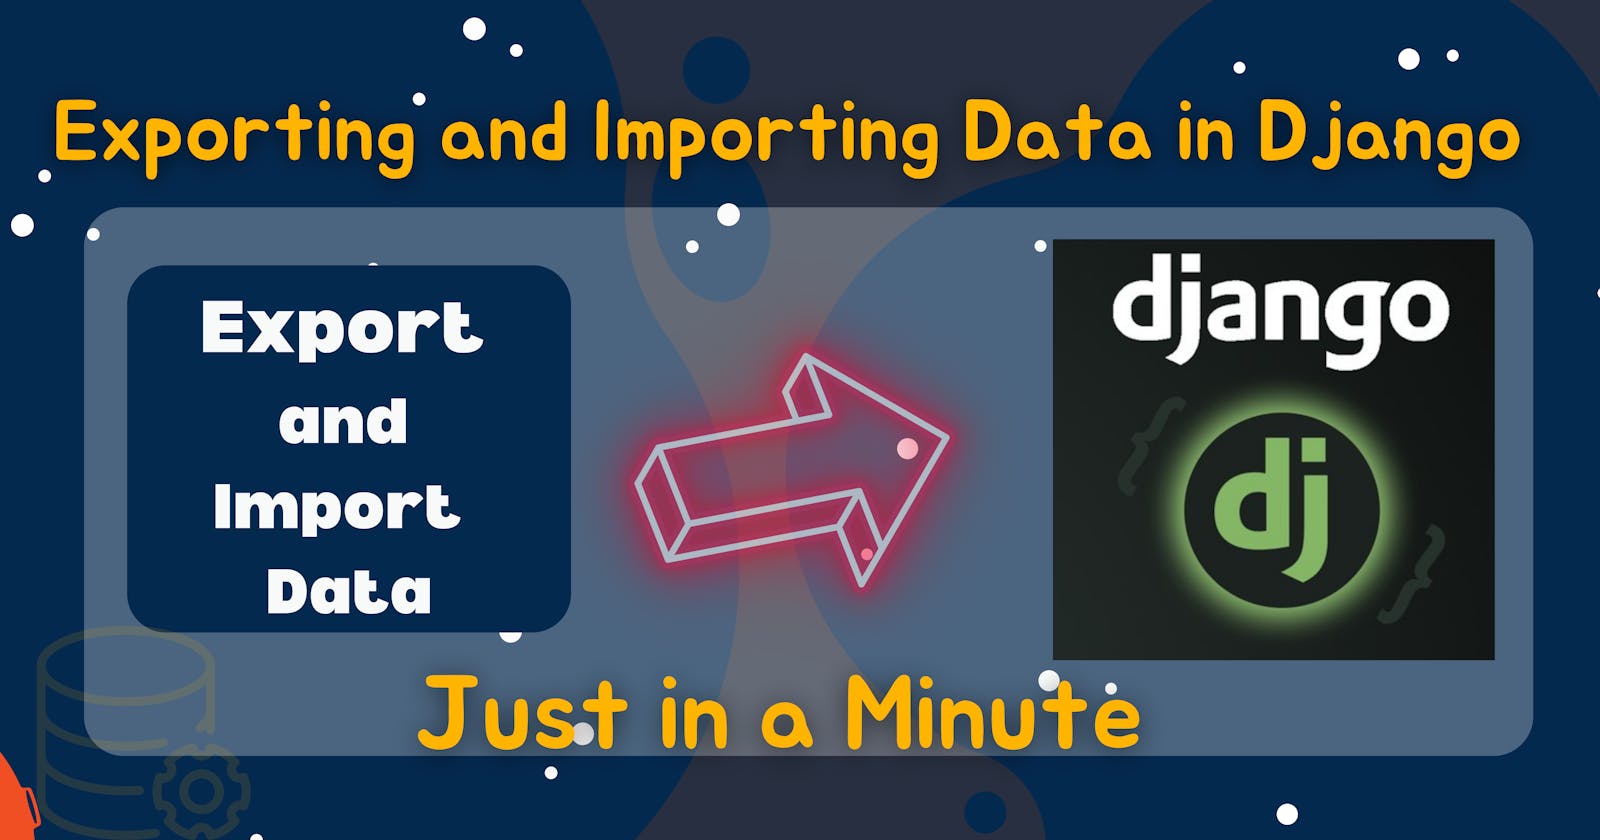 Exporting and Importing Data in Django